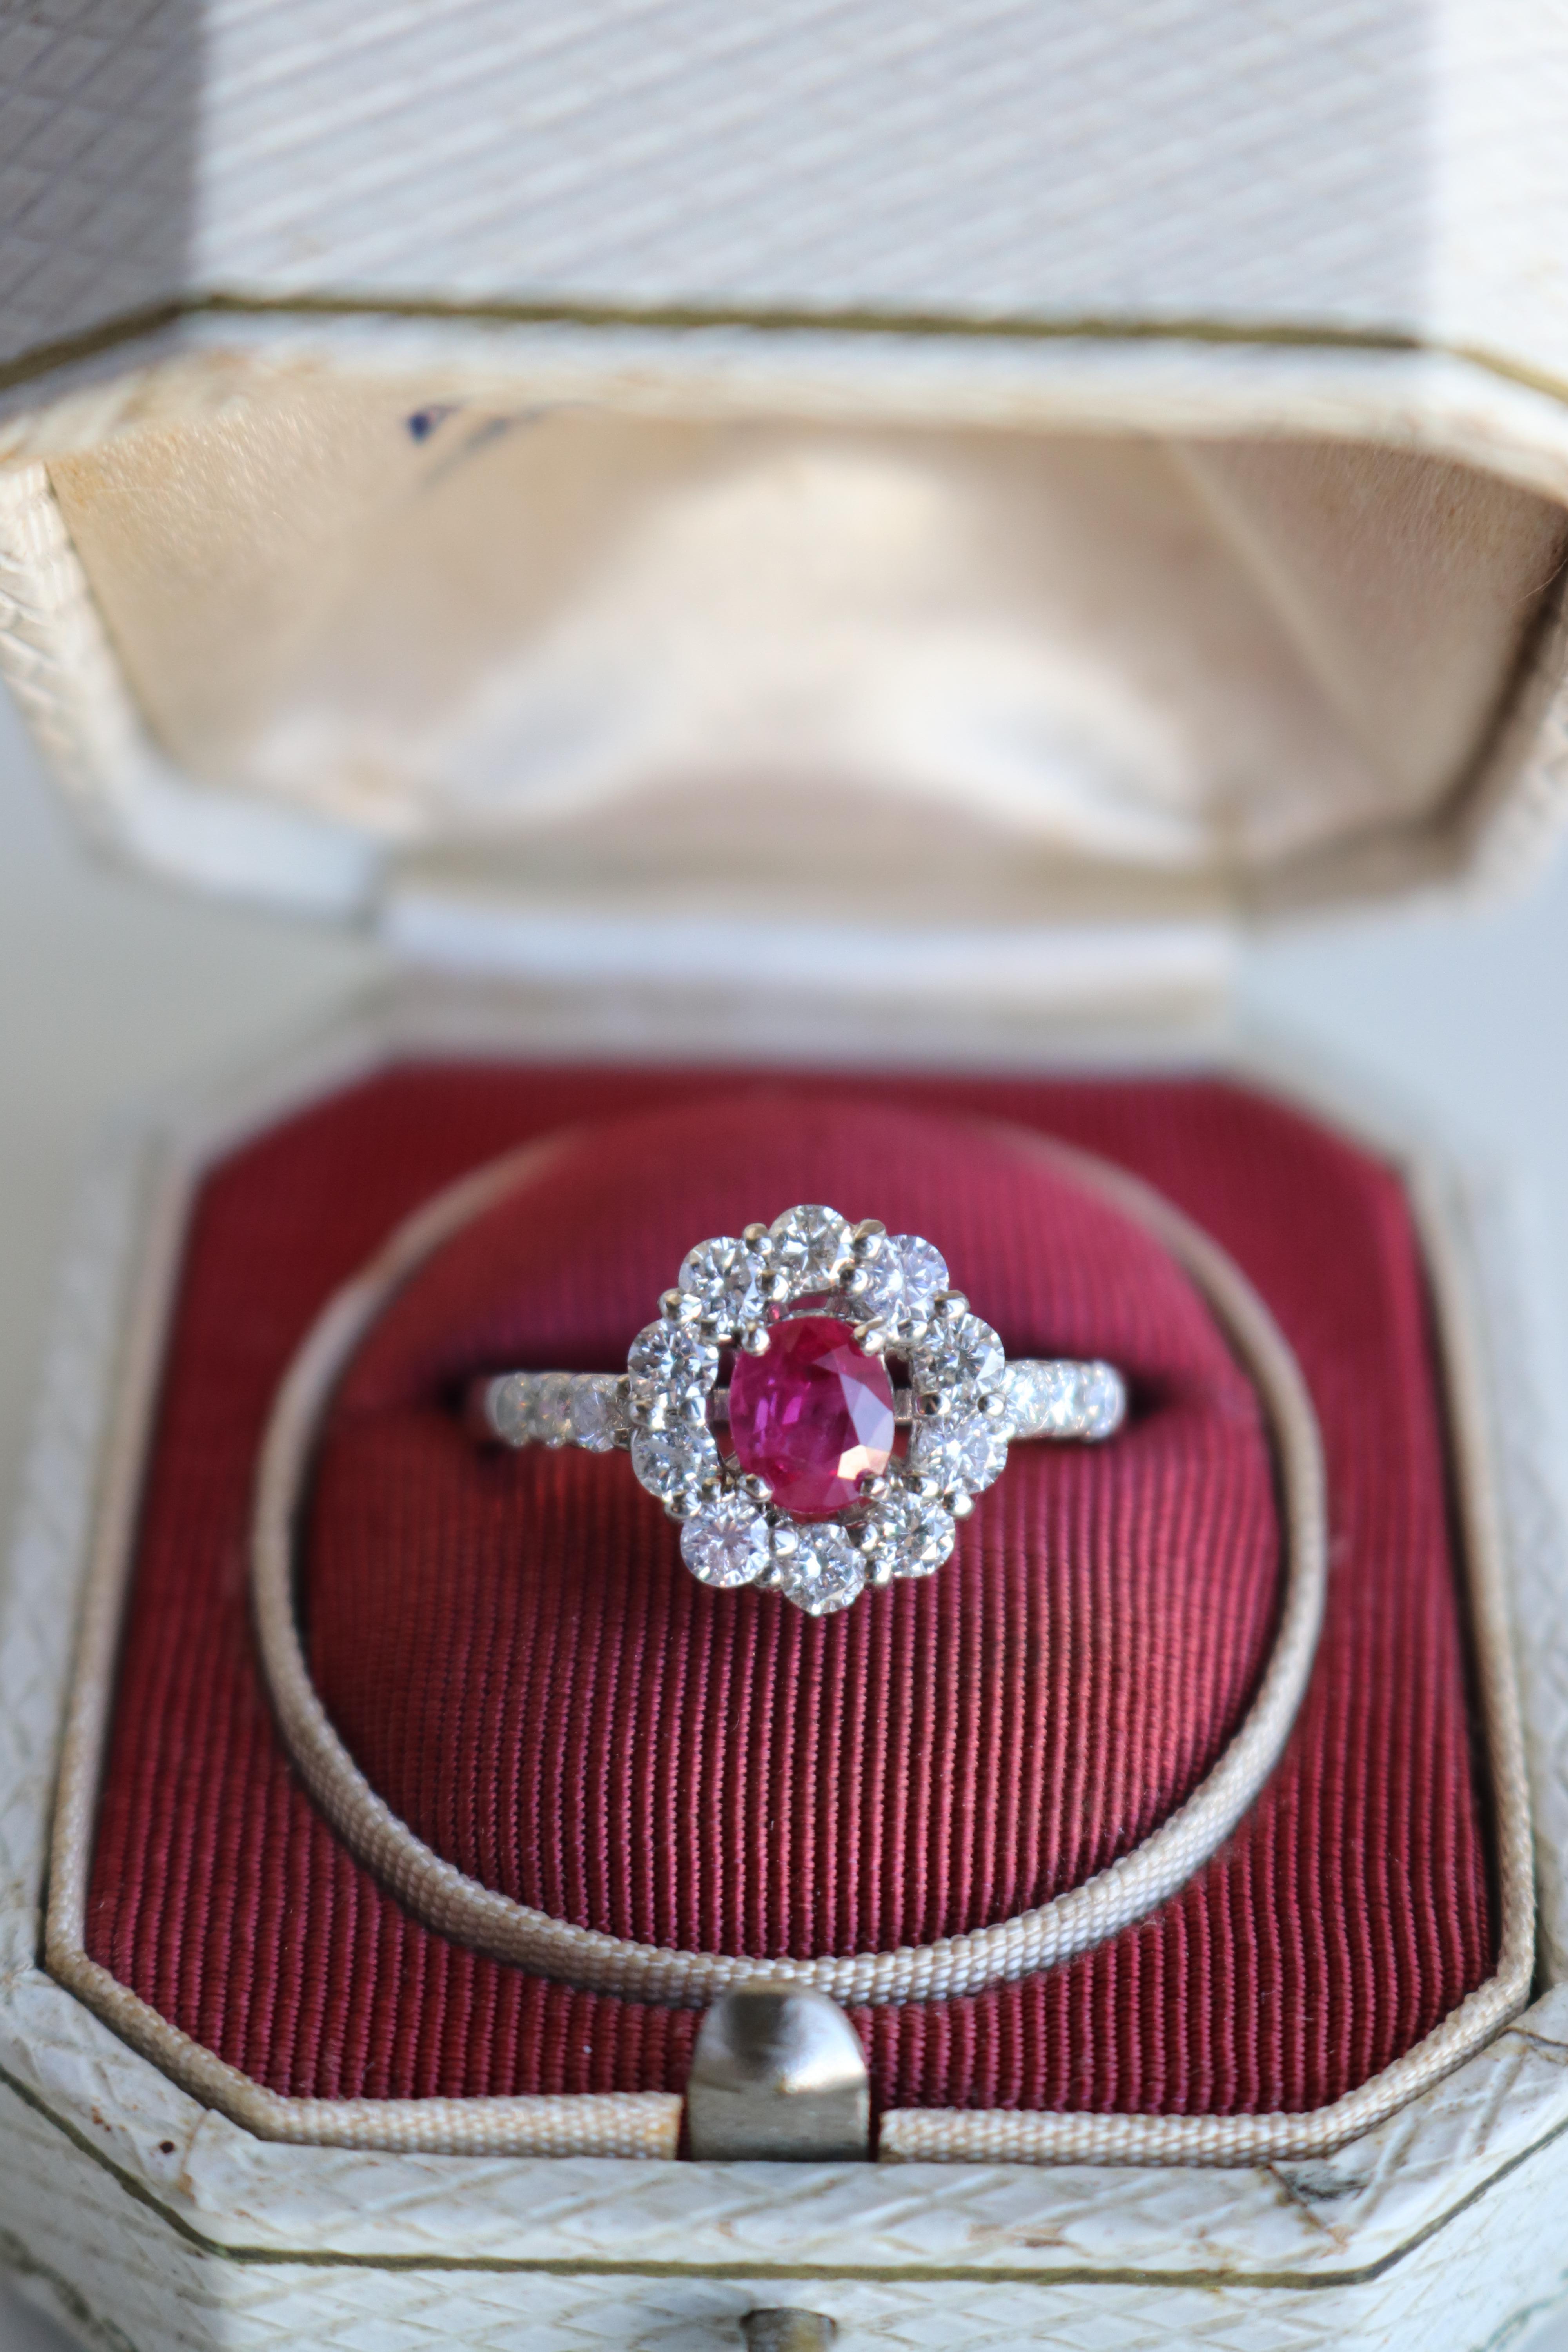 Women's or Men's Vintage Ruby Diamond Platinum Ring For Sale